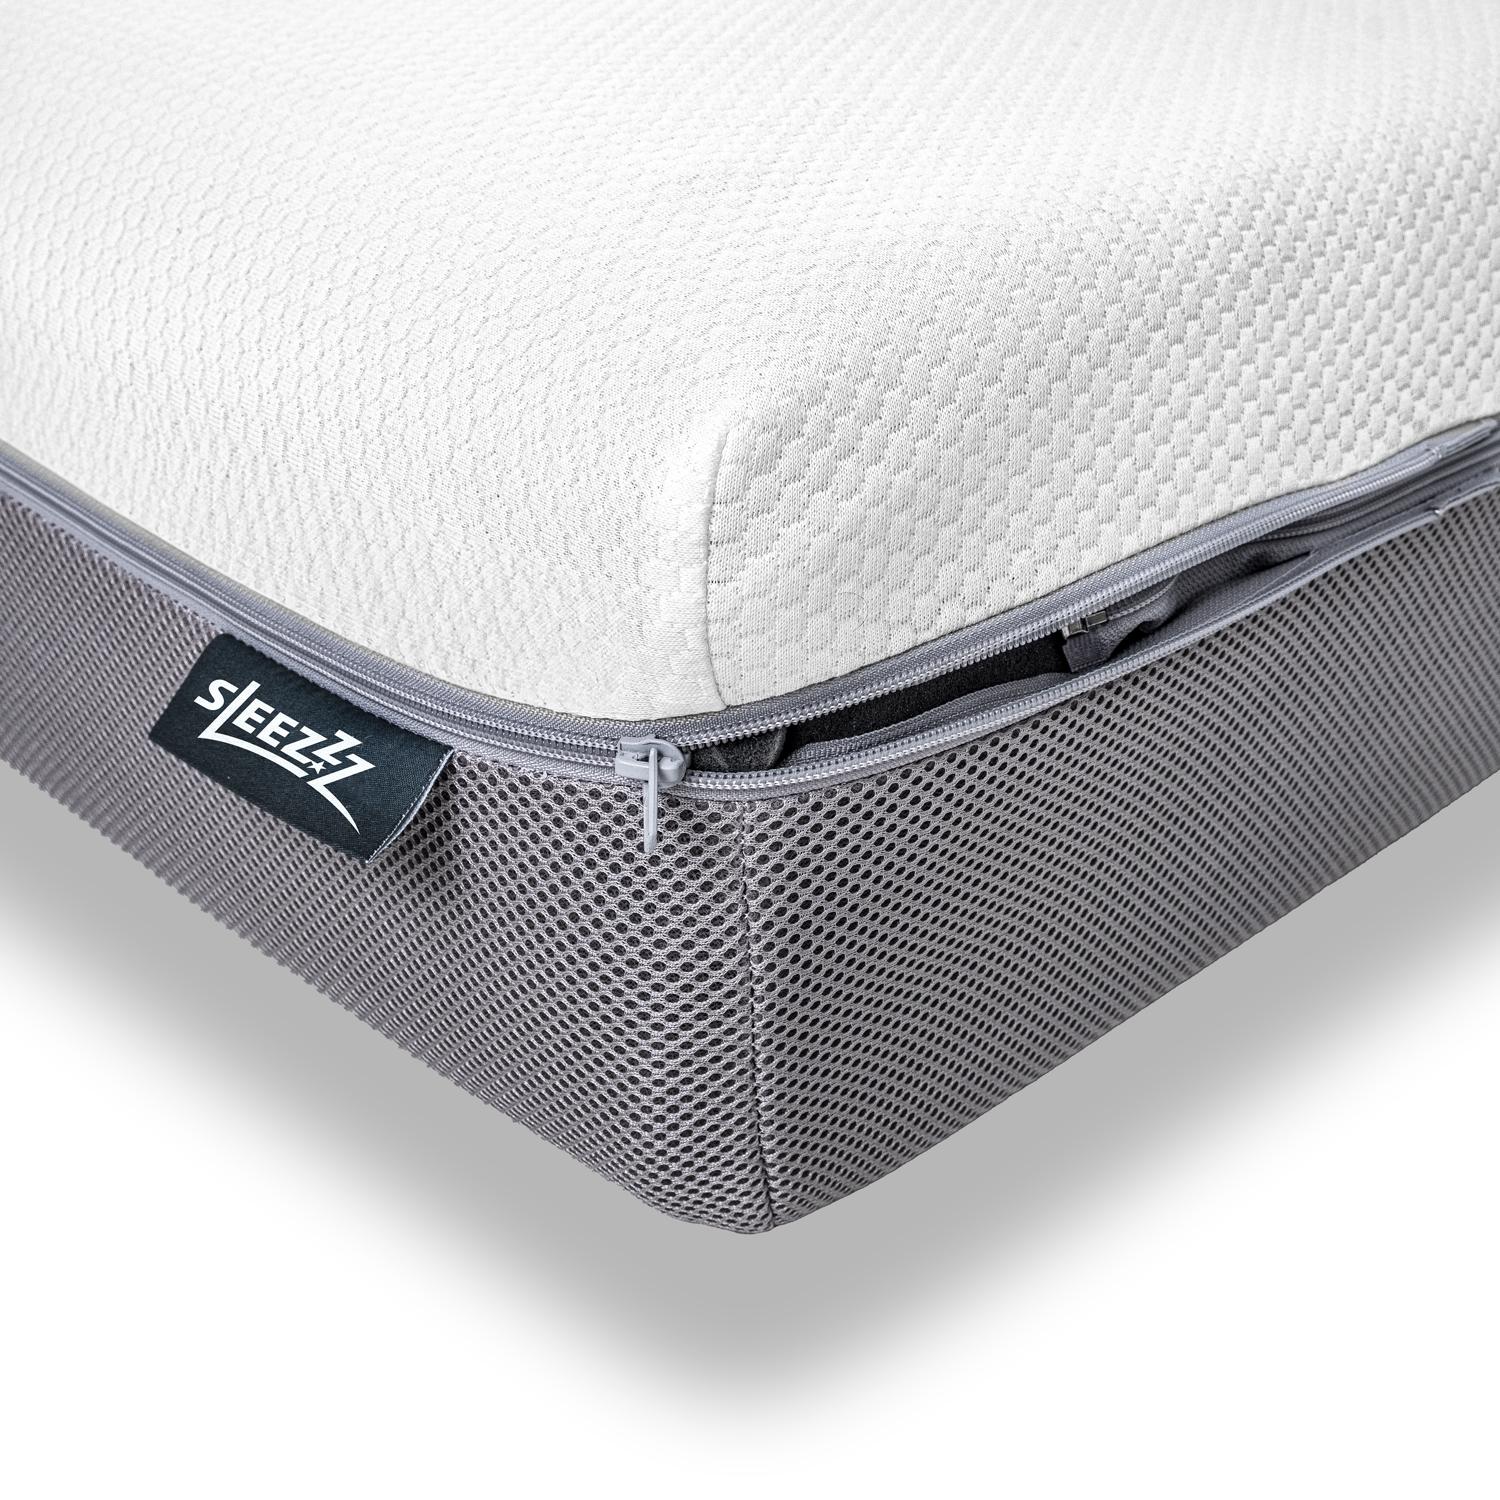 Sleezzz Premium mattress cover 80 x 200 cm, height 20 cm